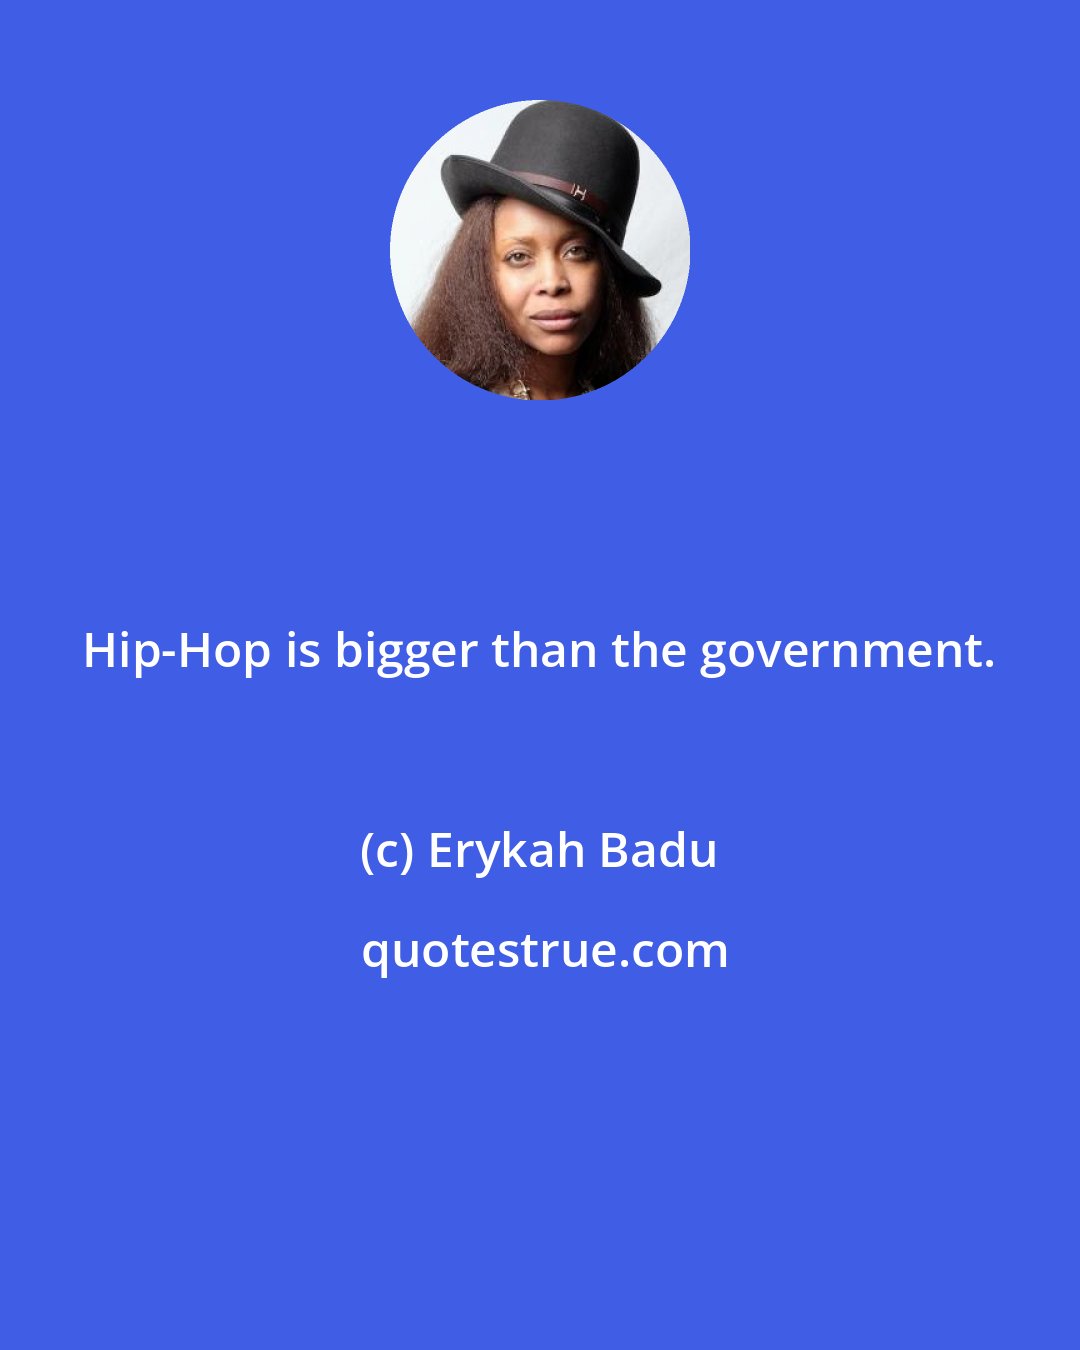 Erykah Badu: Hip-Hop is bigger than the government.